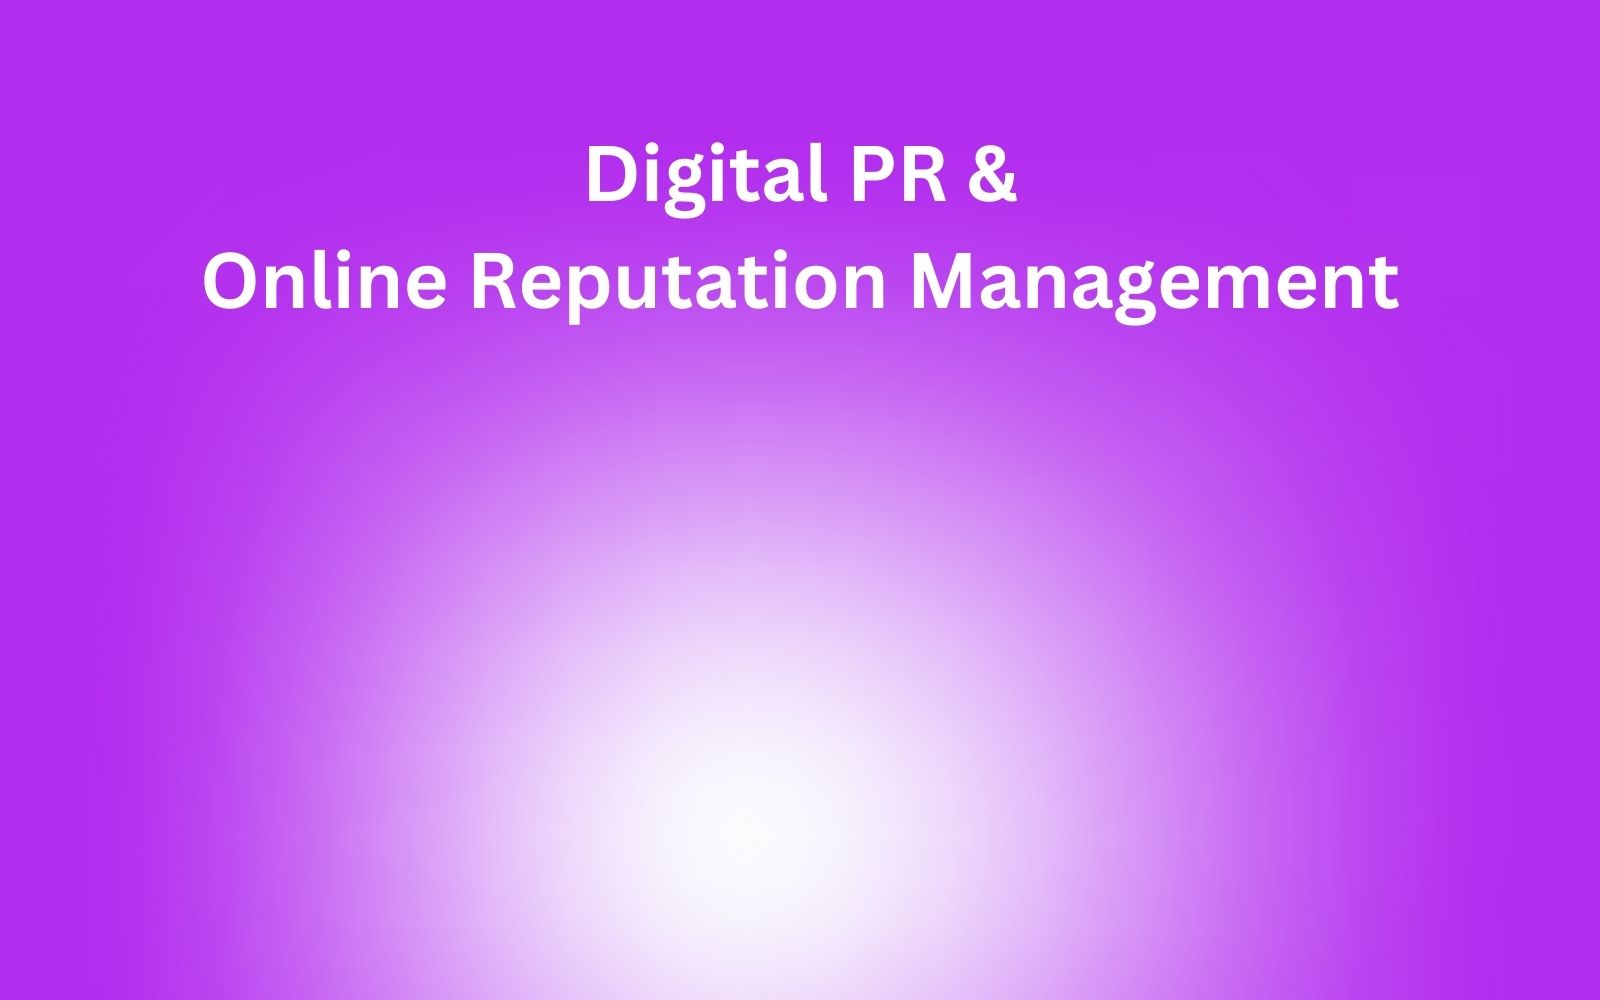 Digital PR and online reputation management